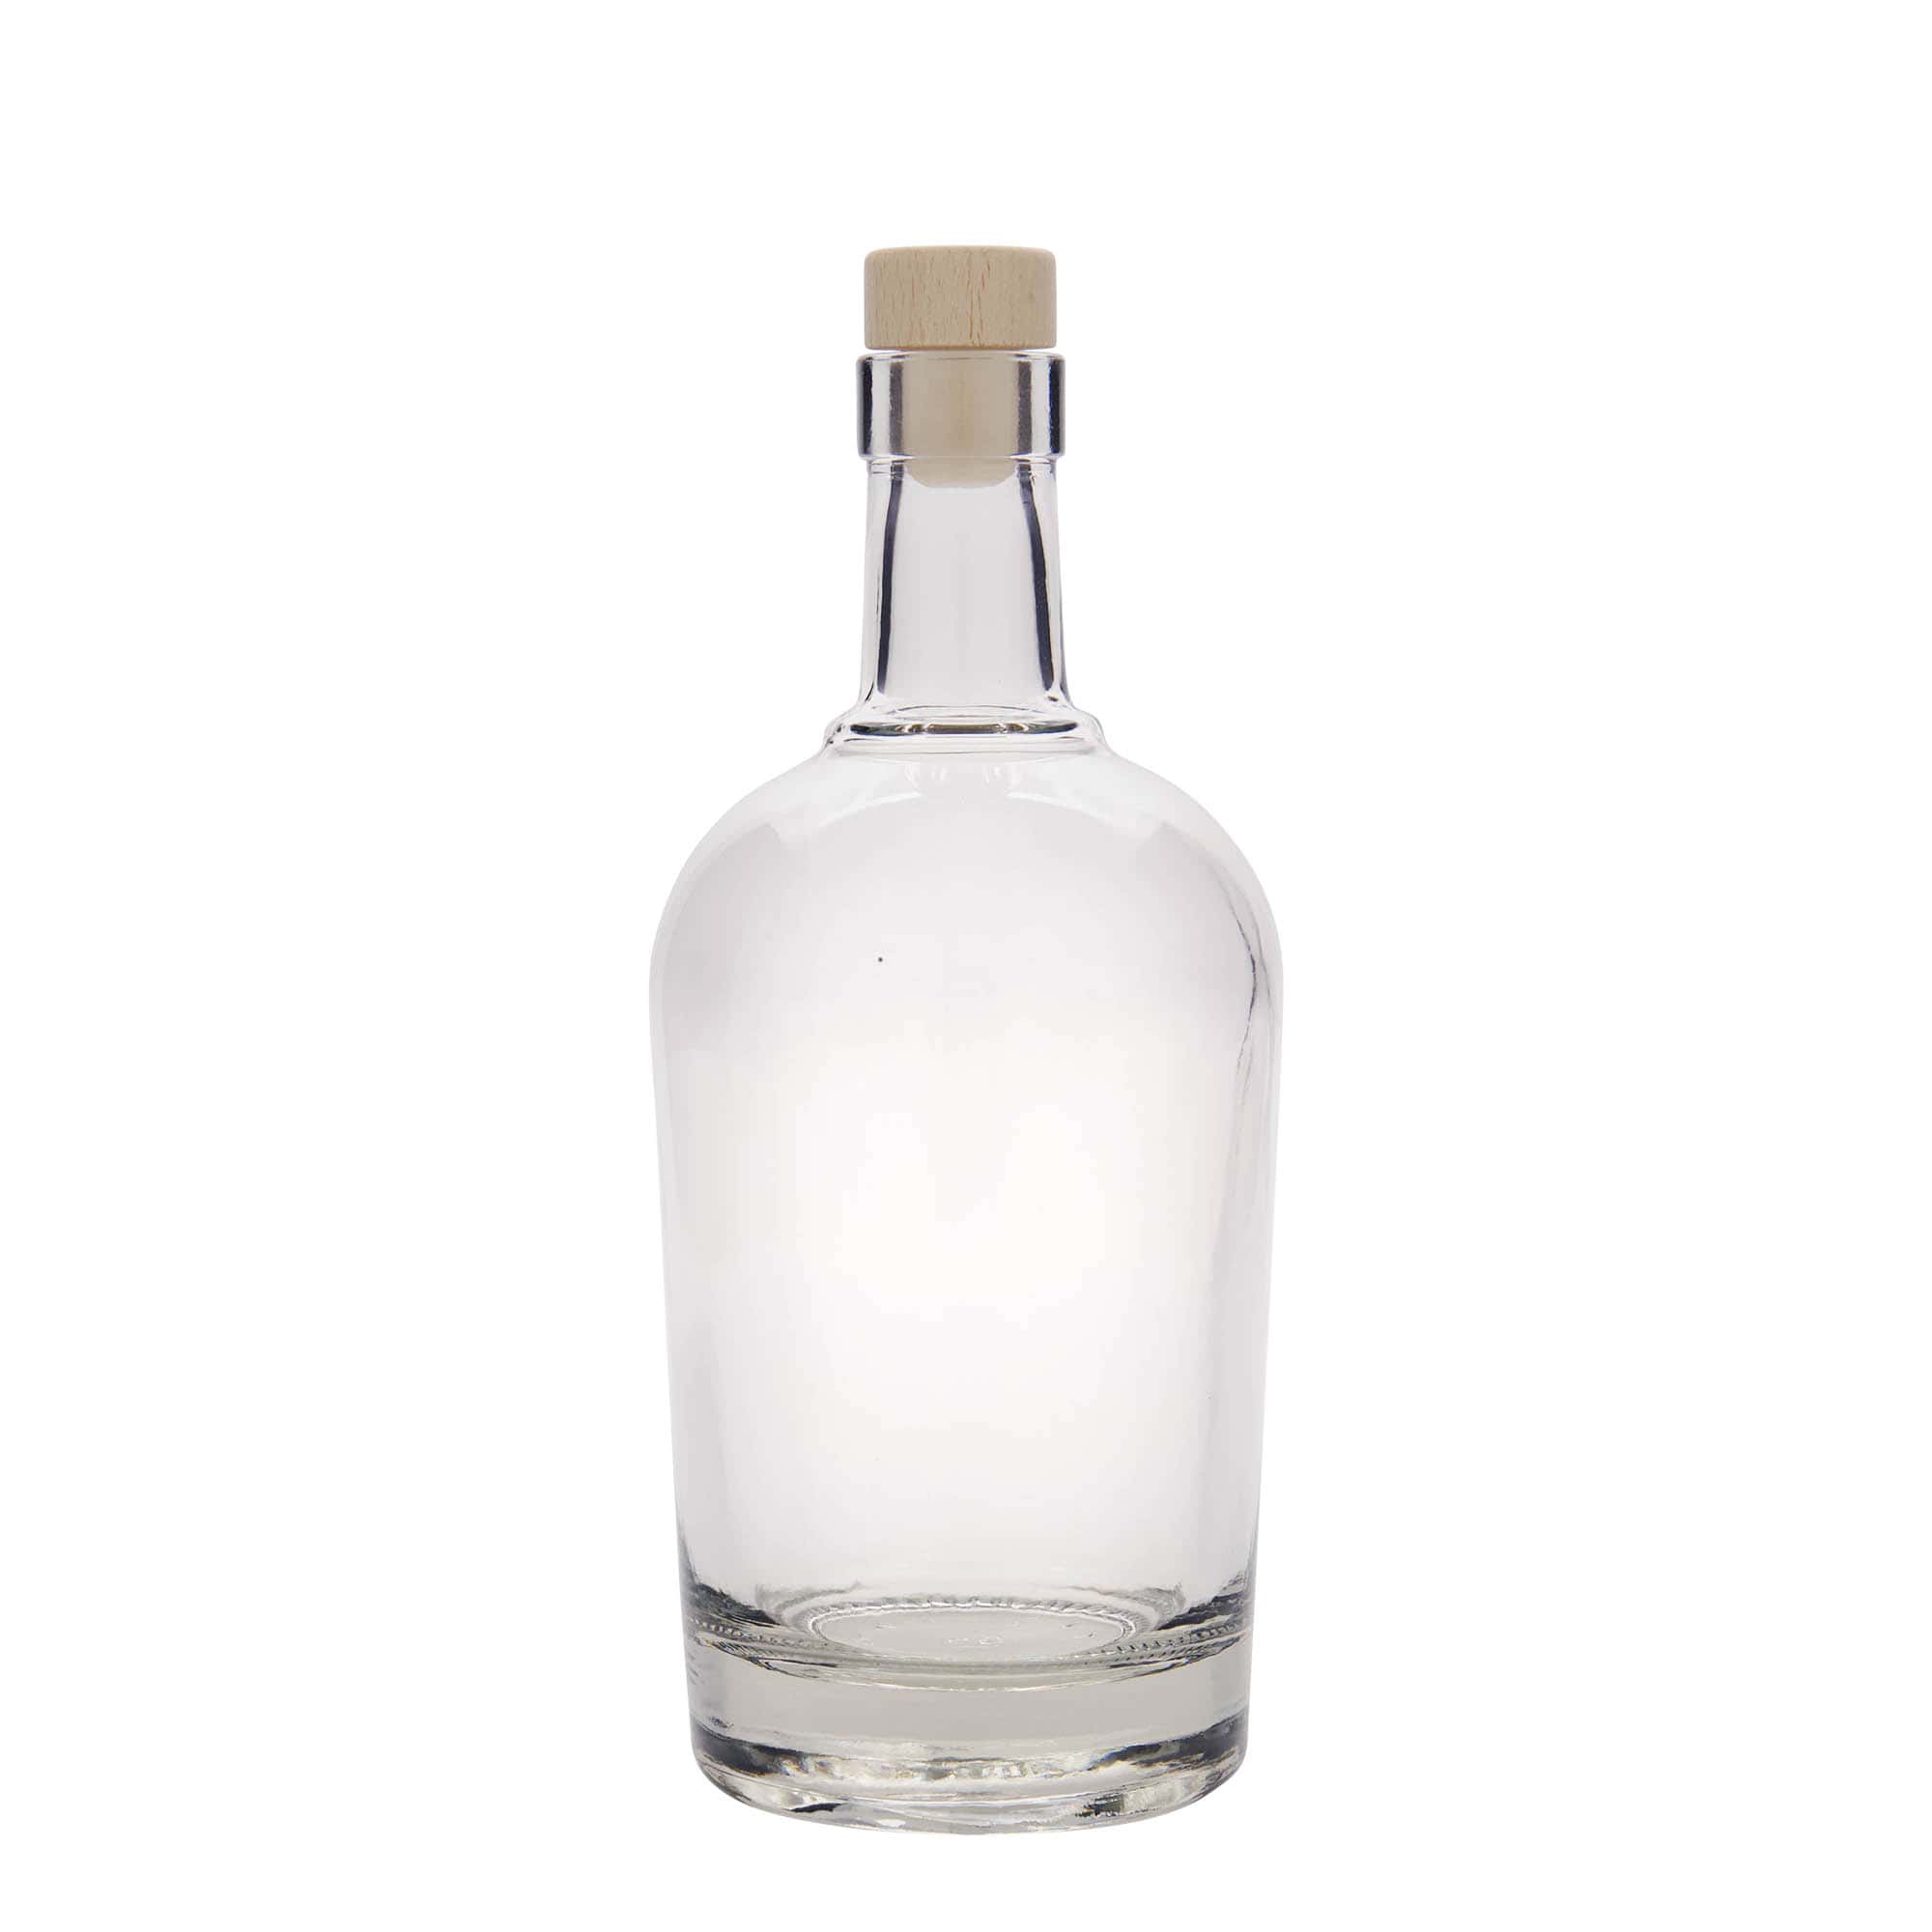 700 ml glass bottle 'Amarillo', closure: cork